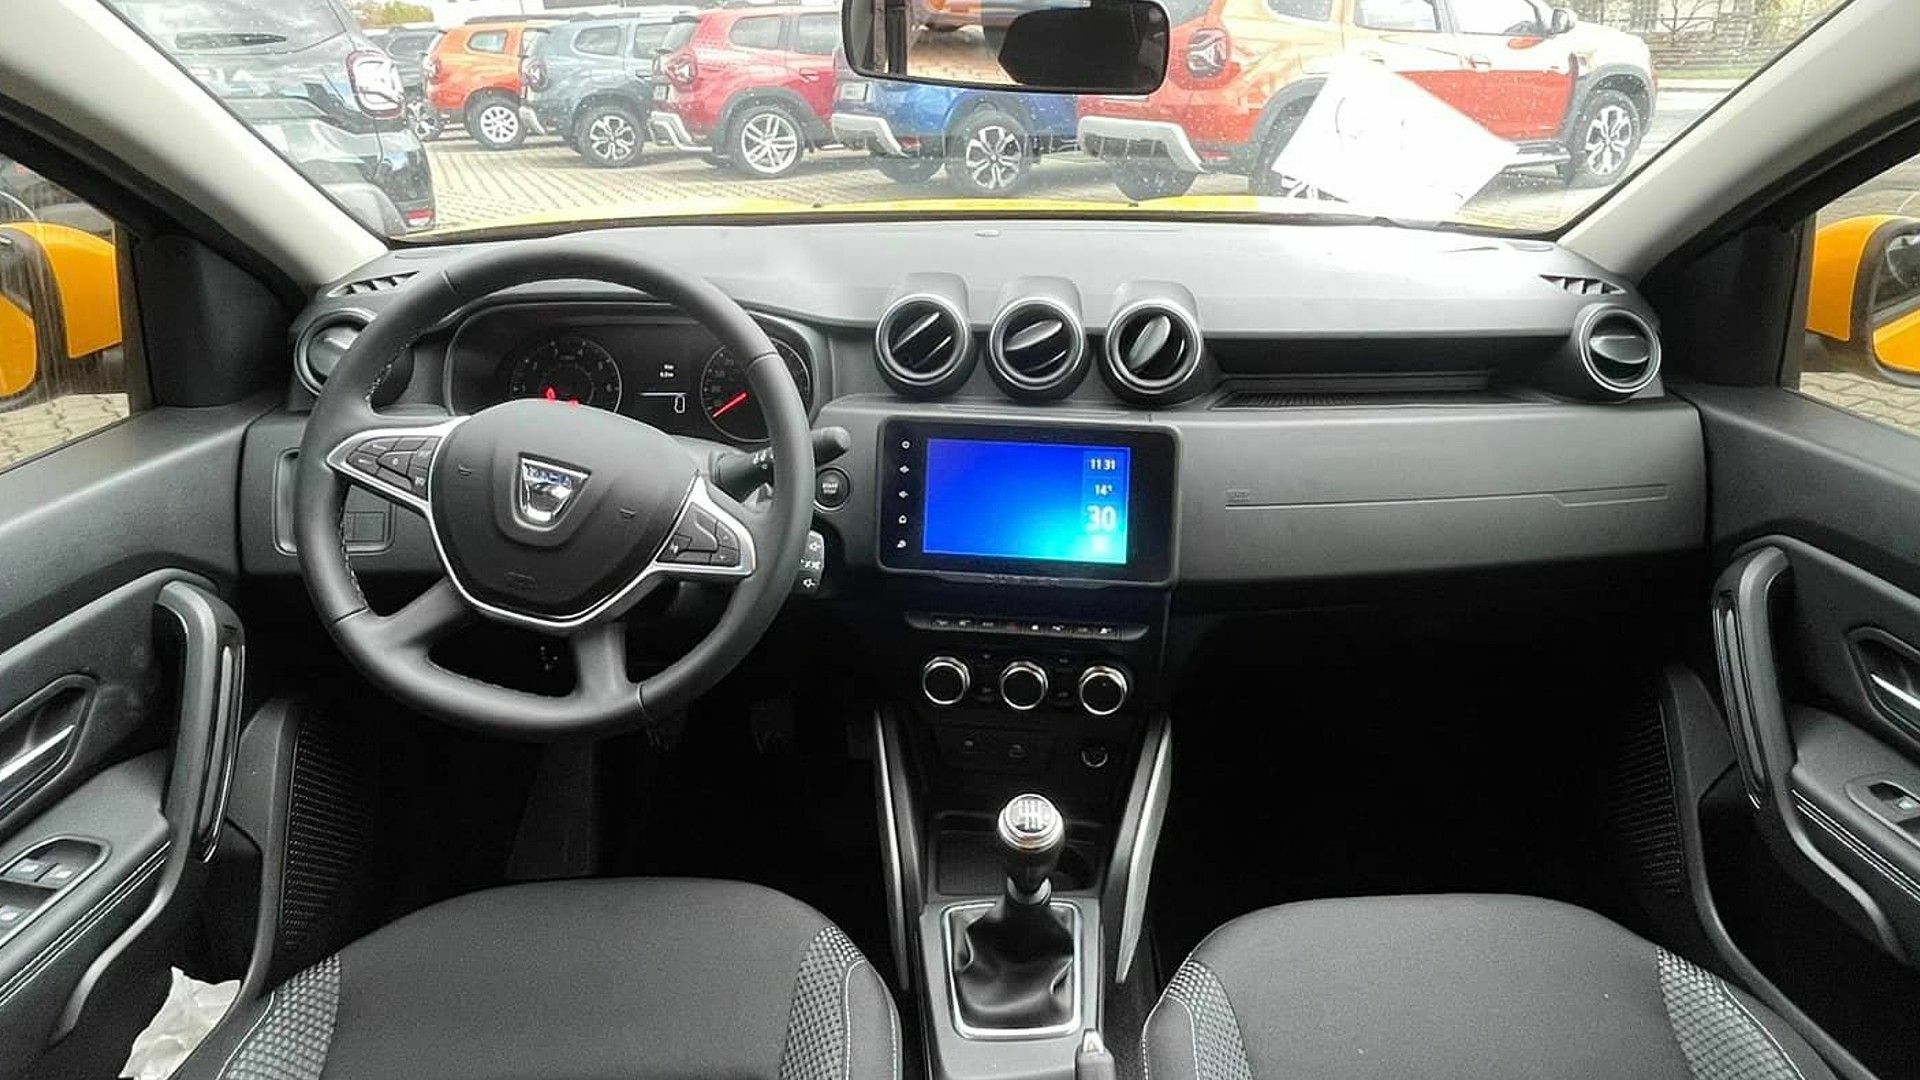 Dacia Duster Interior Pictures - autoevolution